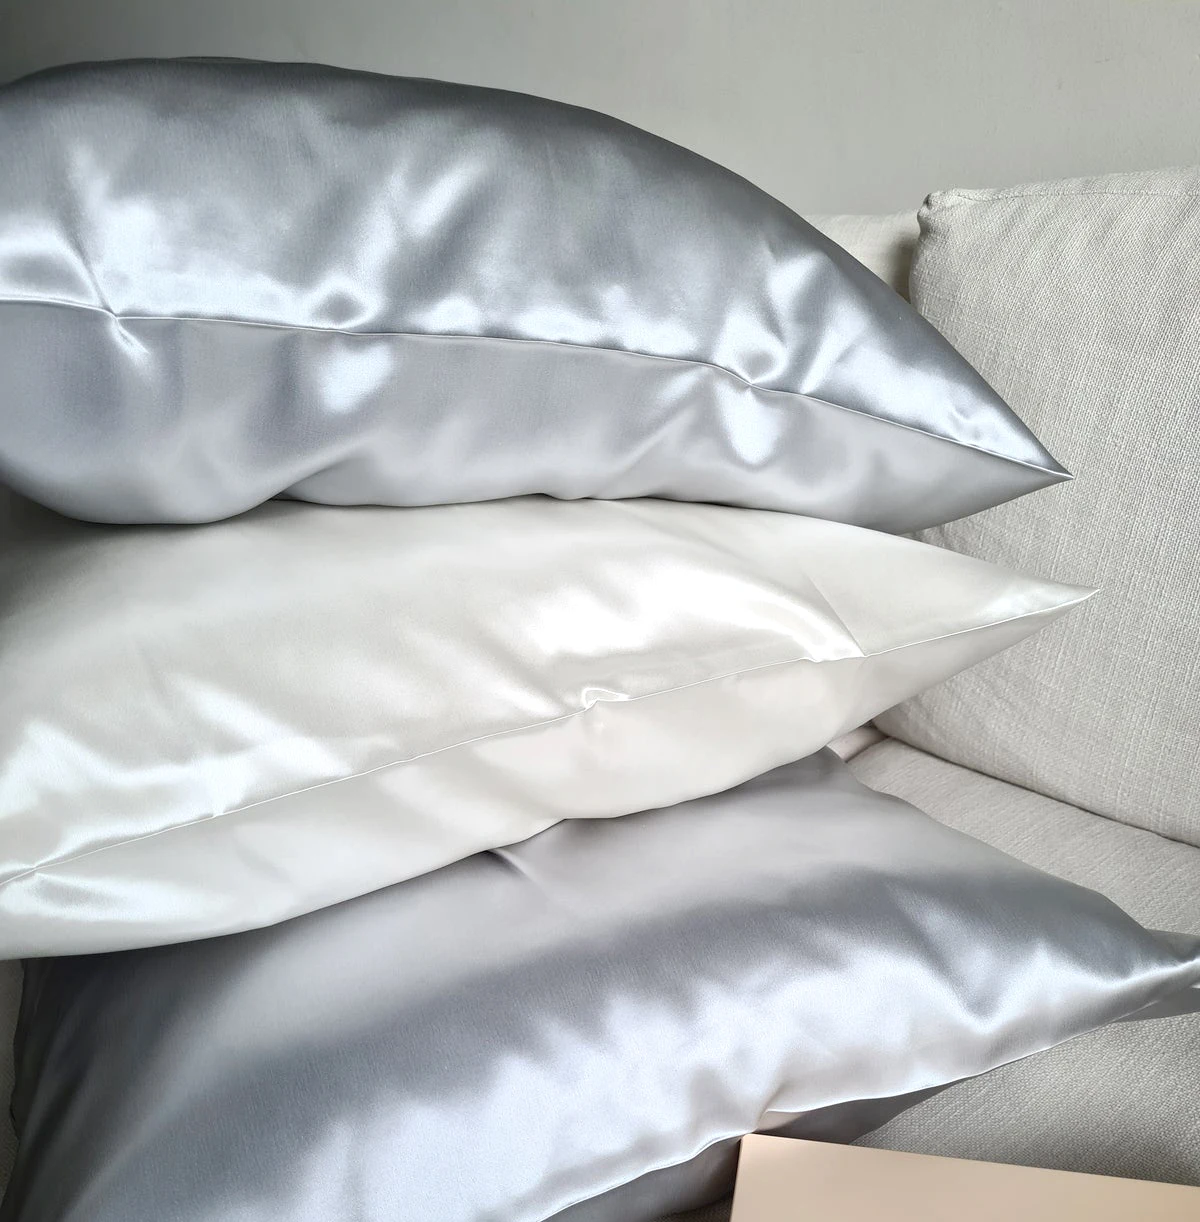 Wholesale peace silk pillowcase organic silk pillowcase gift set with gift boxes Pure Silk Pillowcase Gift Set for Women